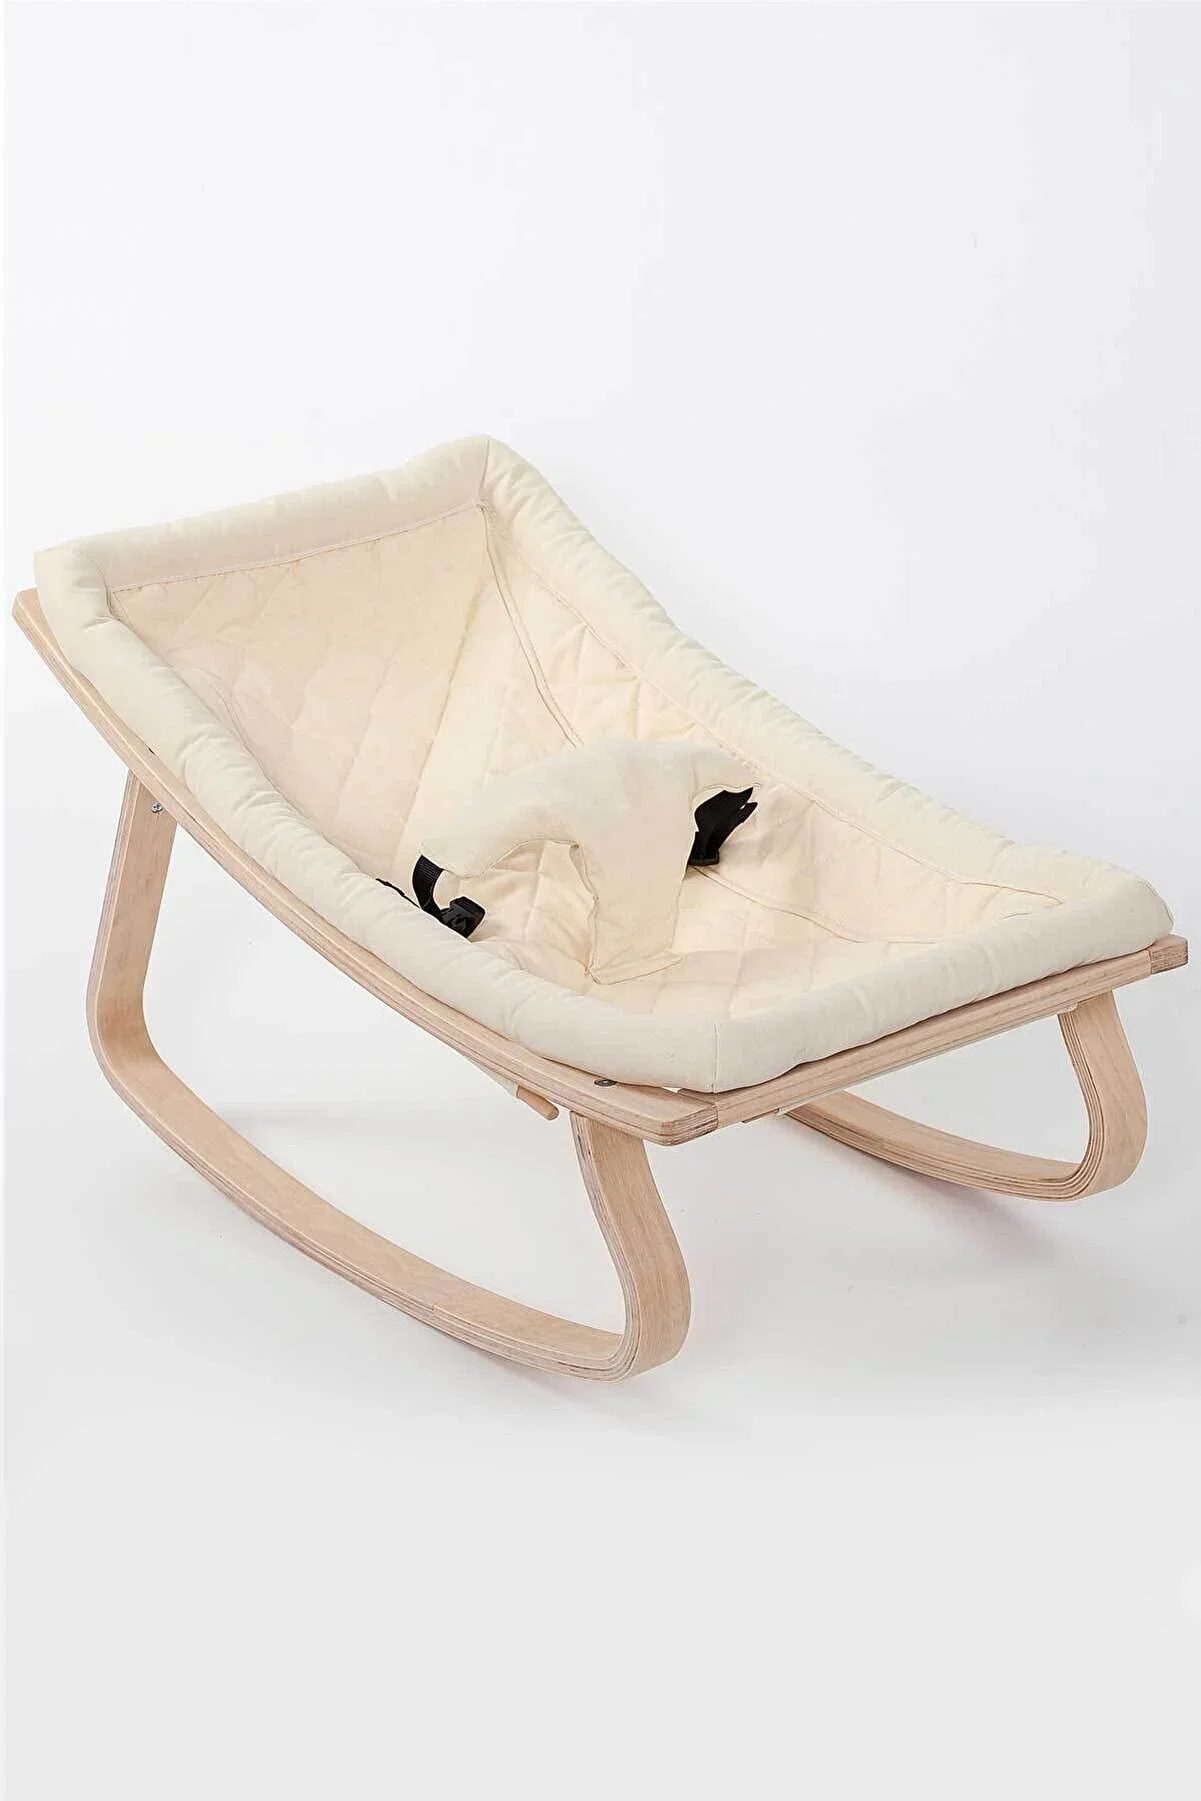 Natural Wooden Rocking Baby Sleeping Bed Baby Cradle Rocking Chair Rocker Baby, Swing Soothing Crib Newborn Nursery